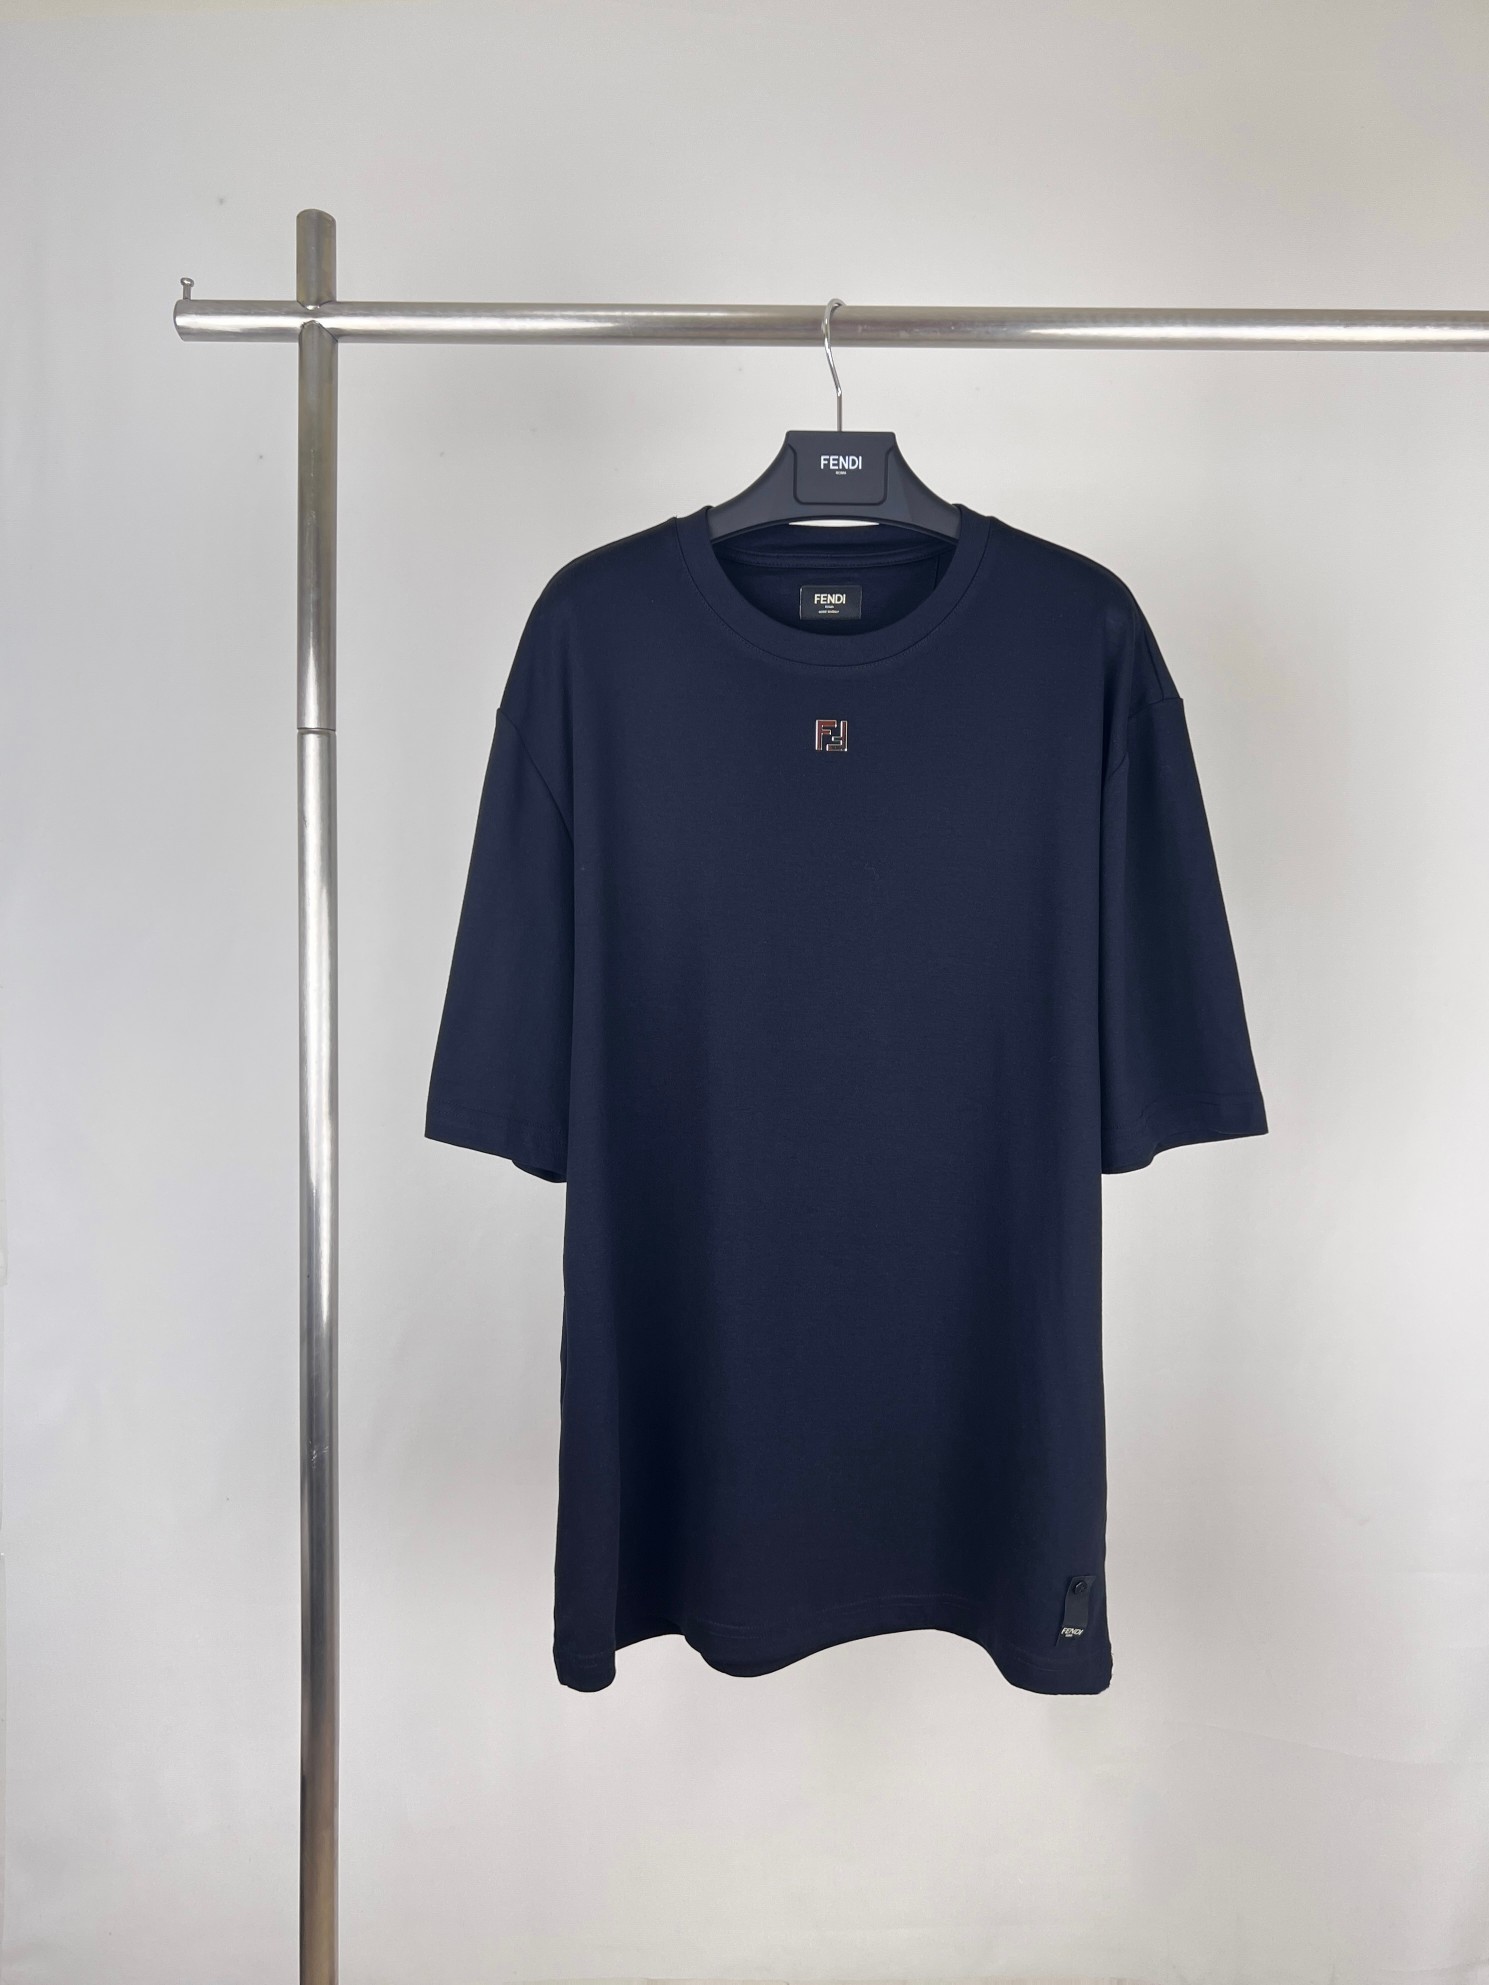 Fendi AAAAA+
 Clothing T-Shirt Designer Replica
 Short Sleeve